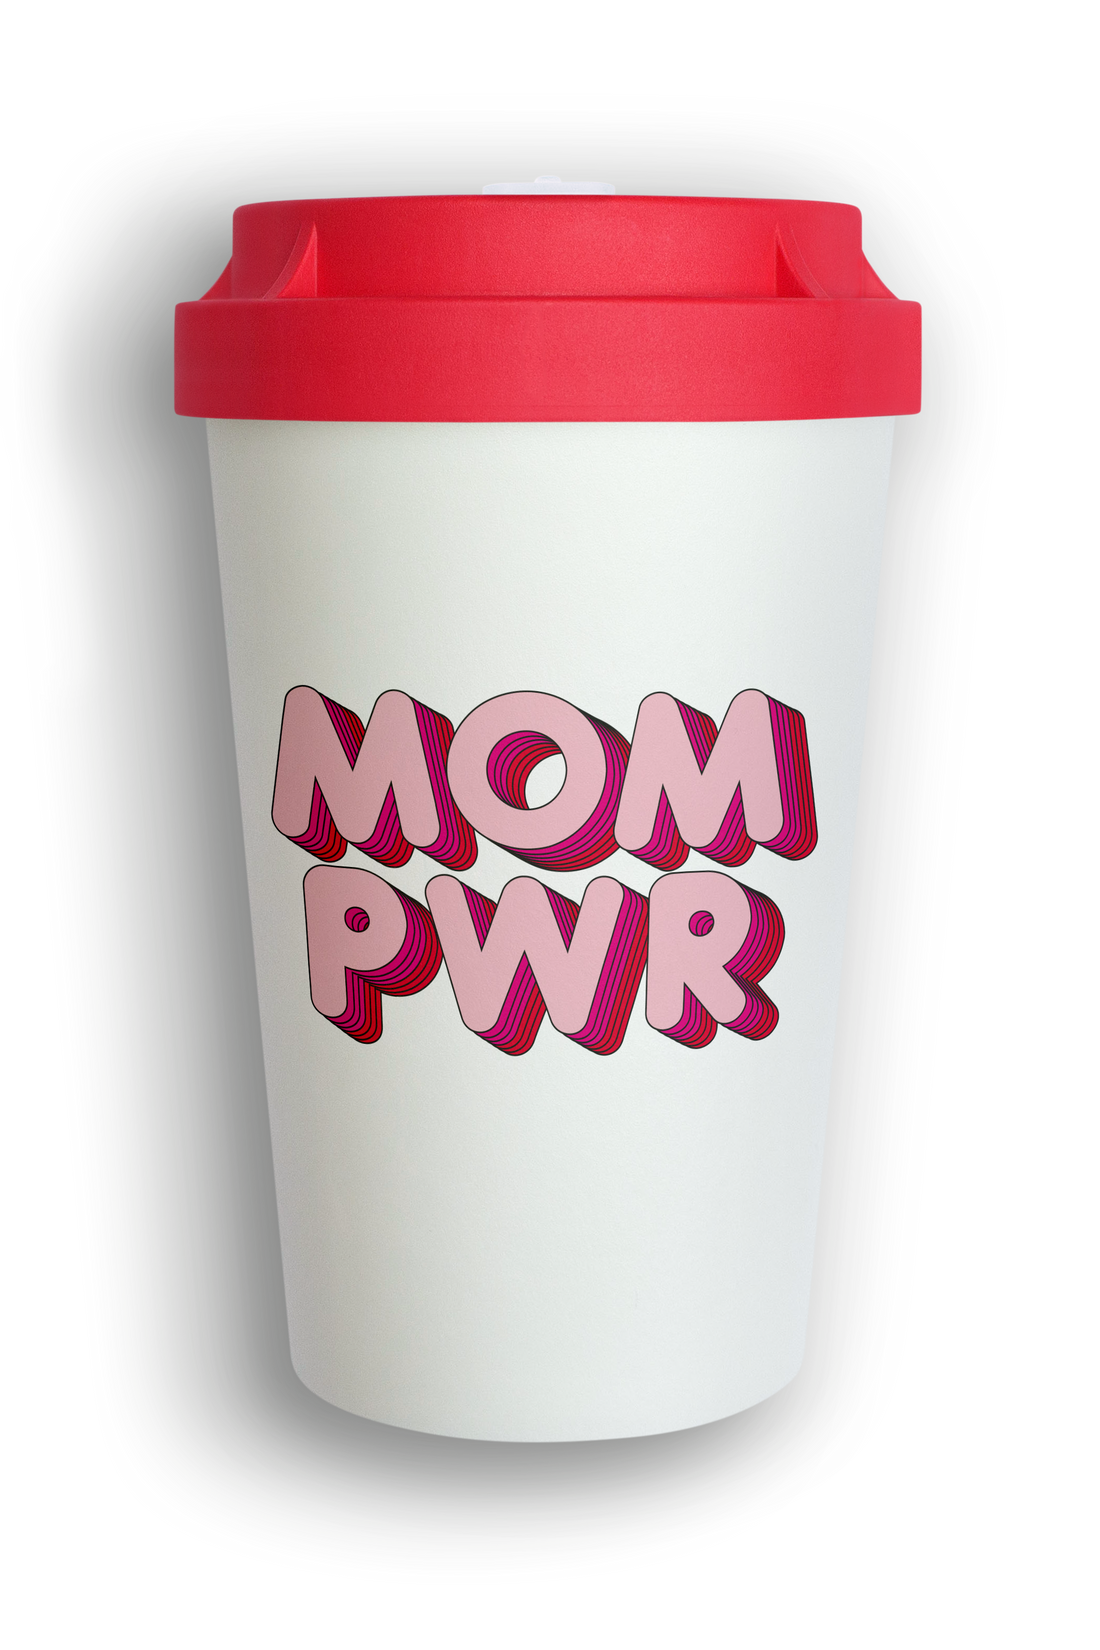 MOM PWR II